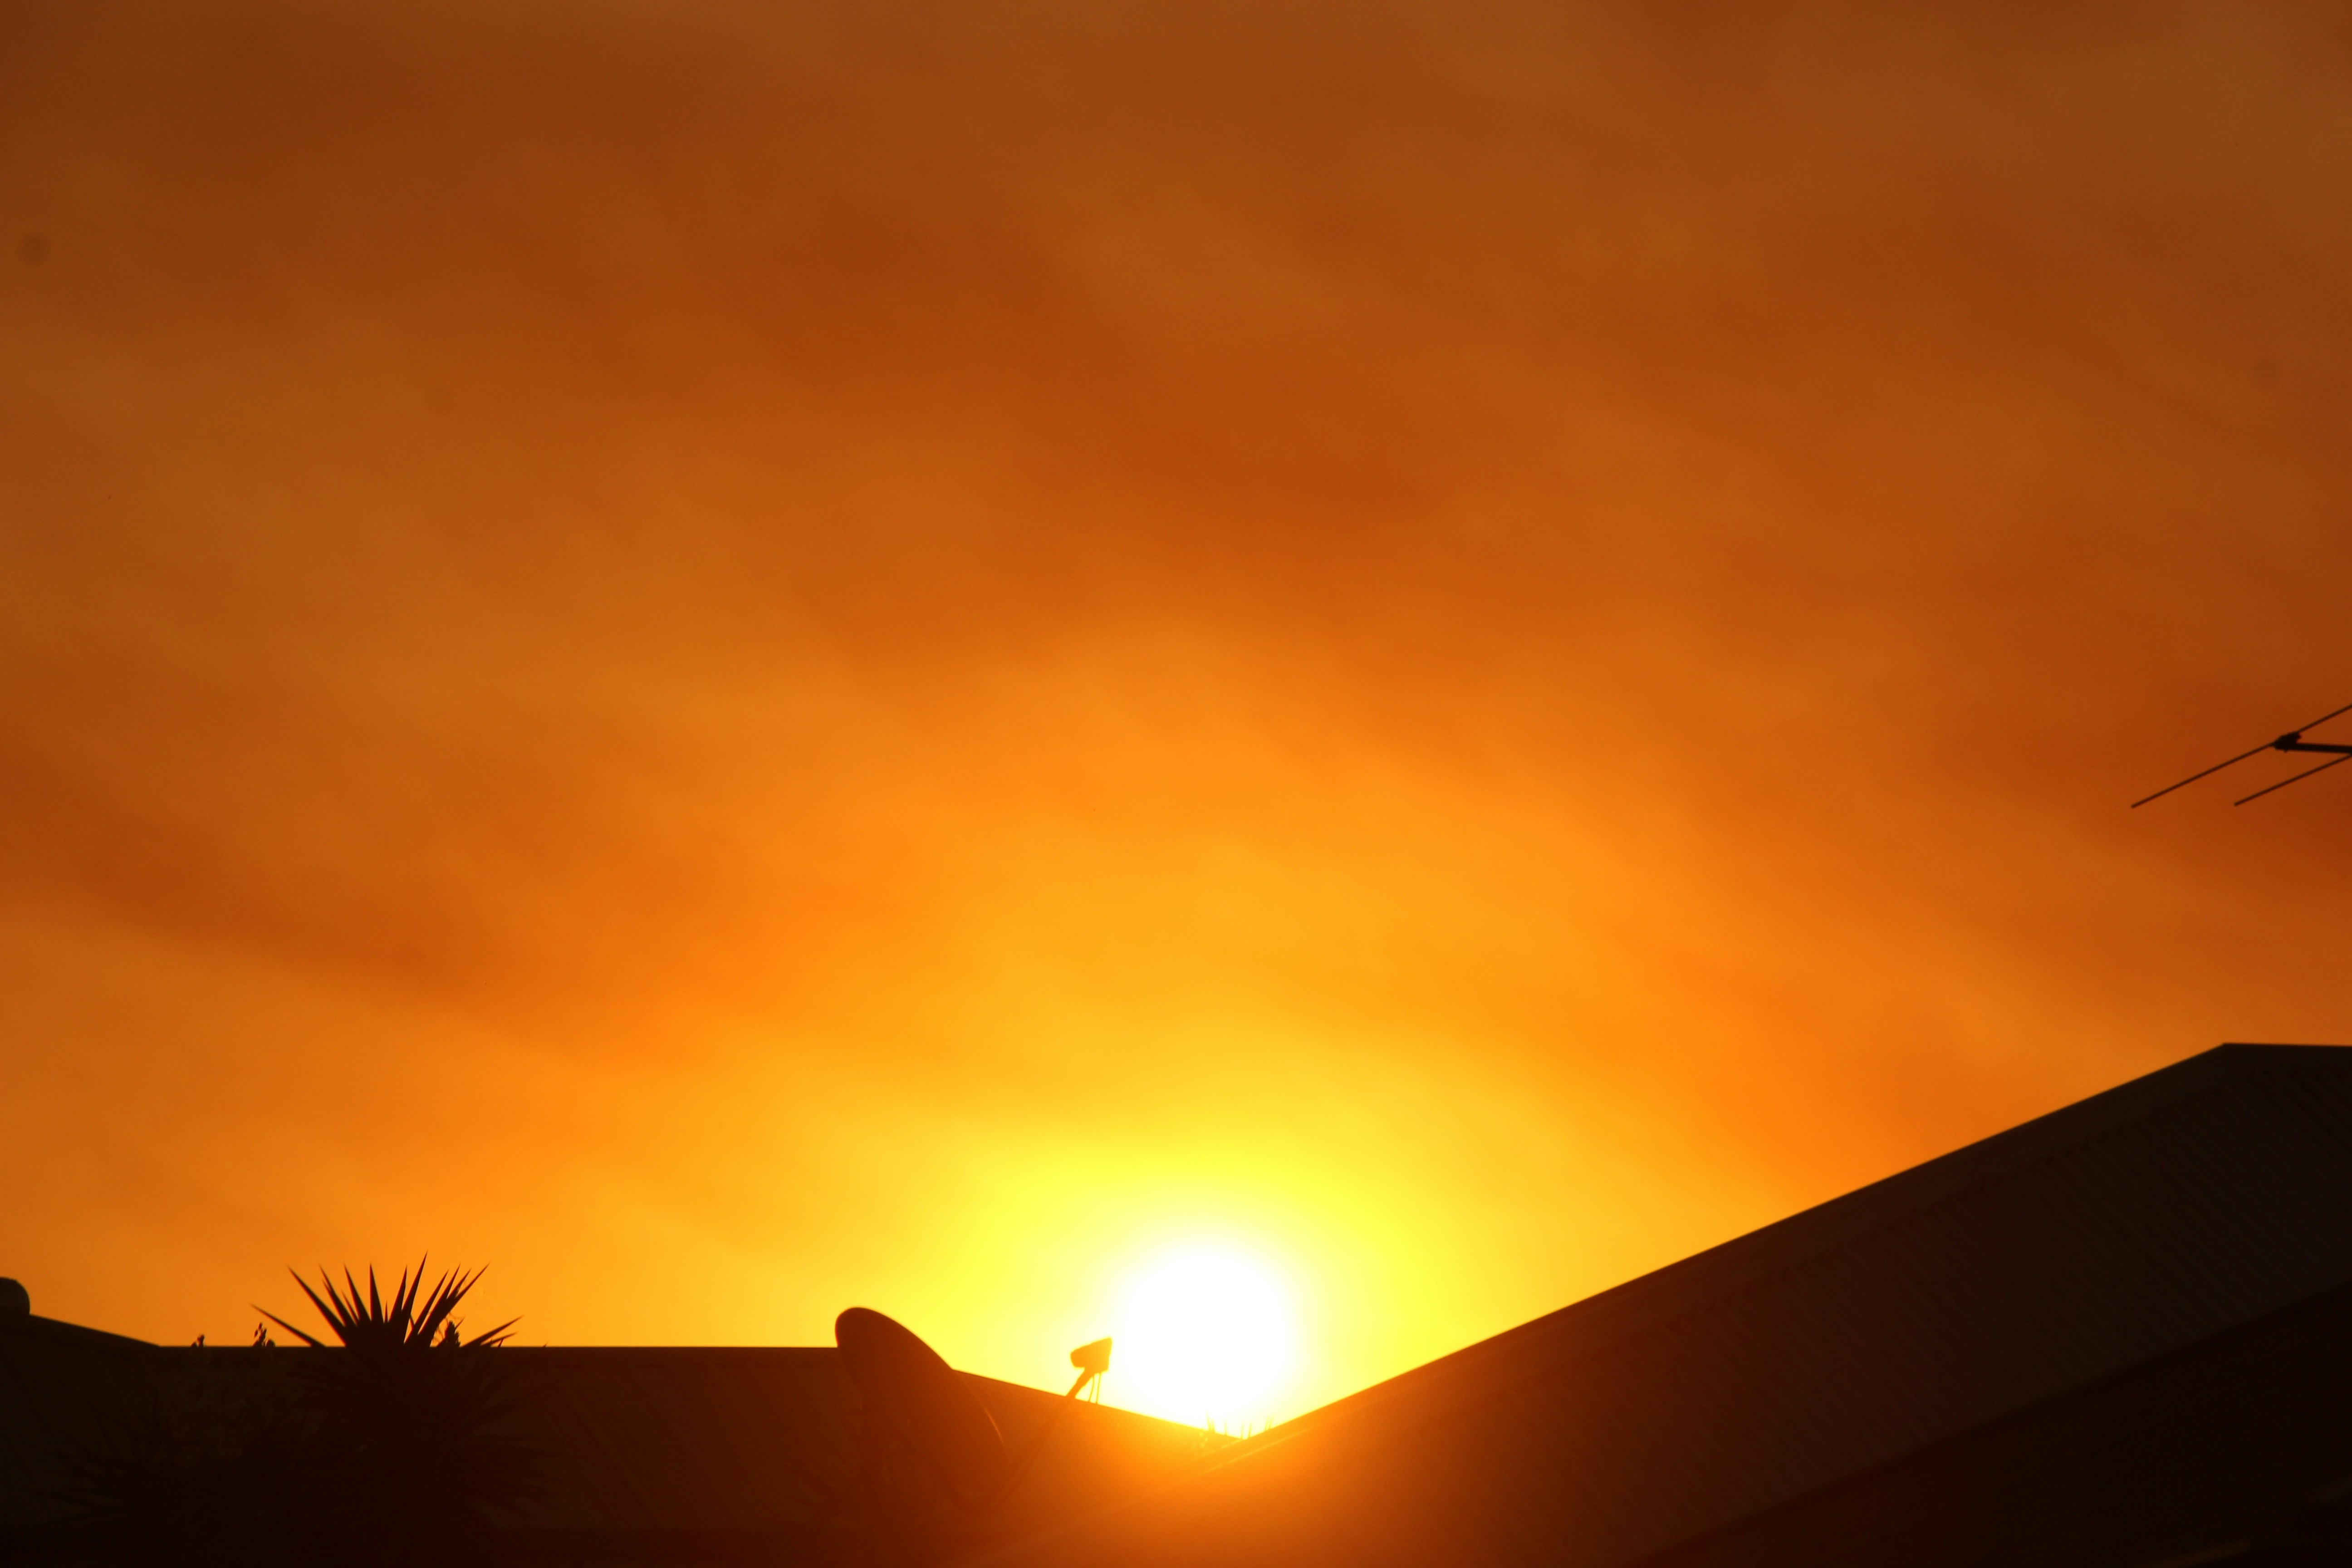 Smokey sunset from bushfires